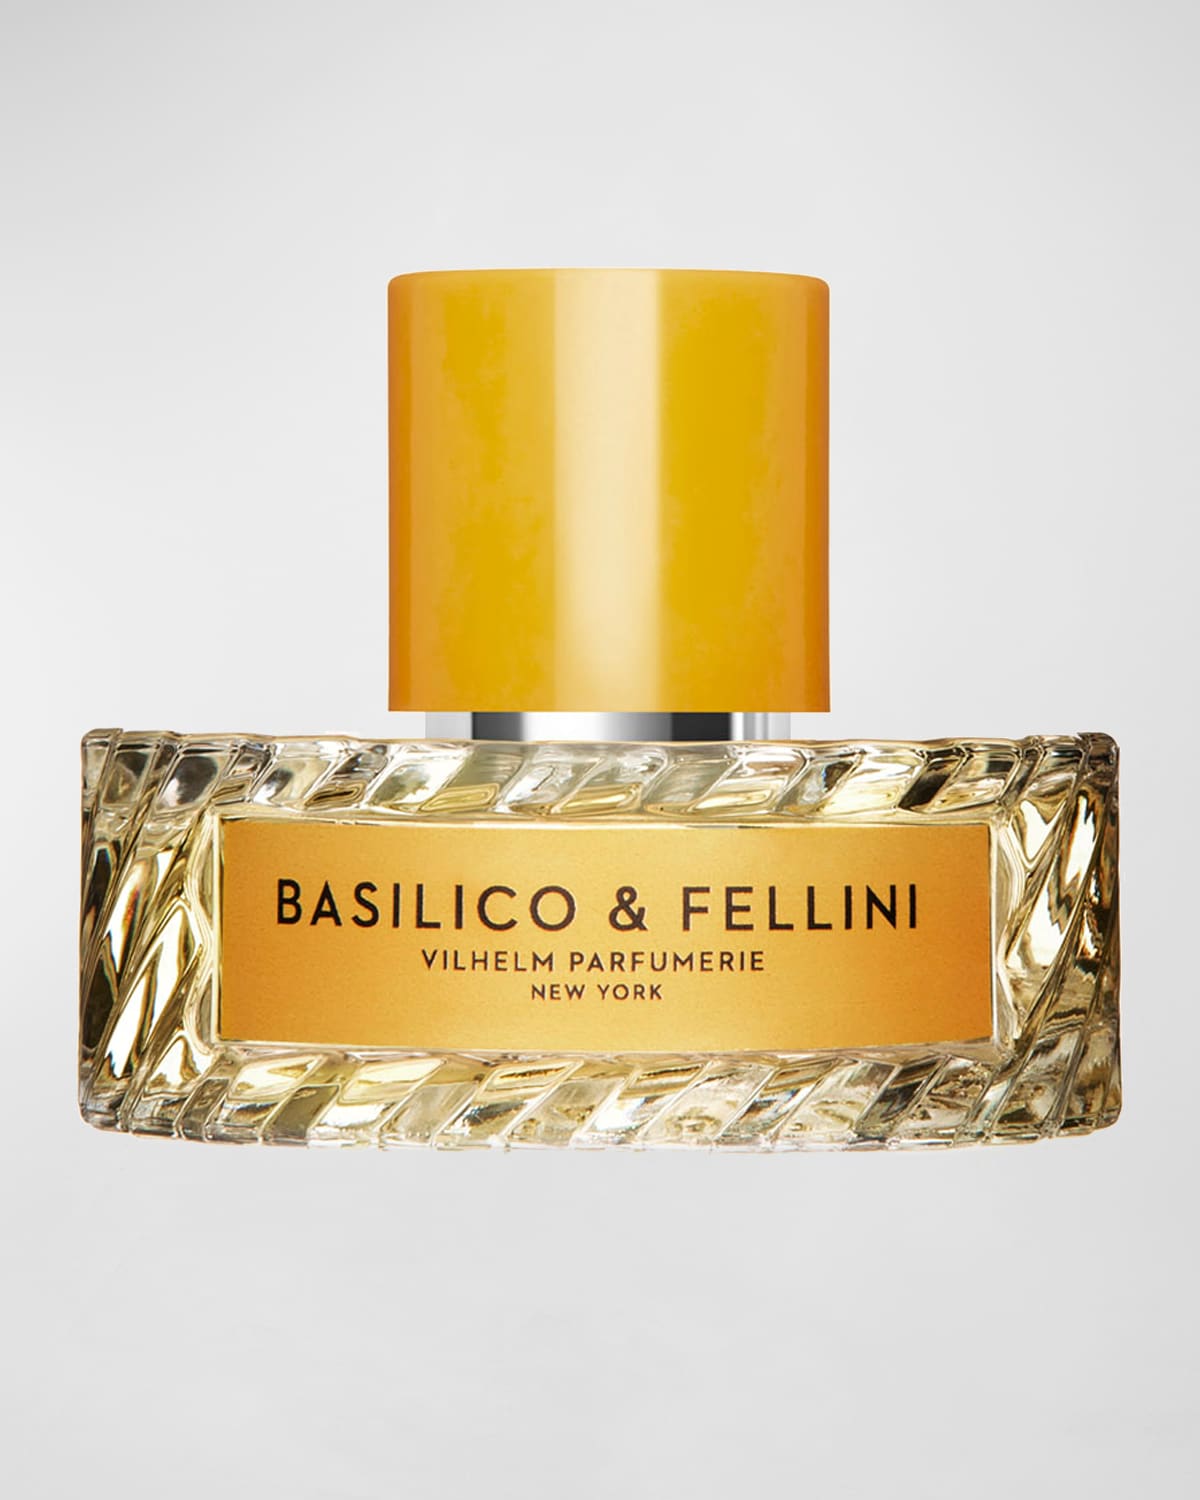 Basilico & Fellini Eau de Parfum, 1.7 oz.